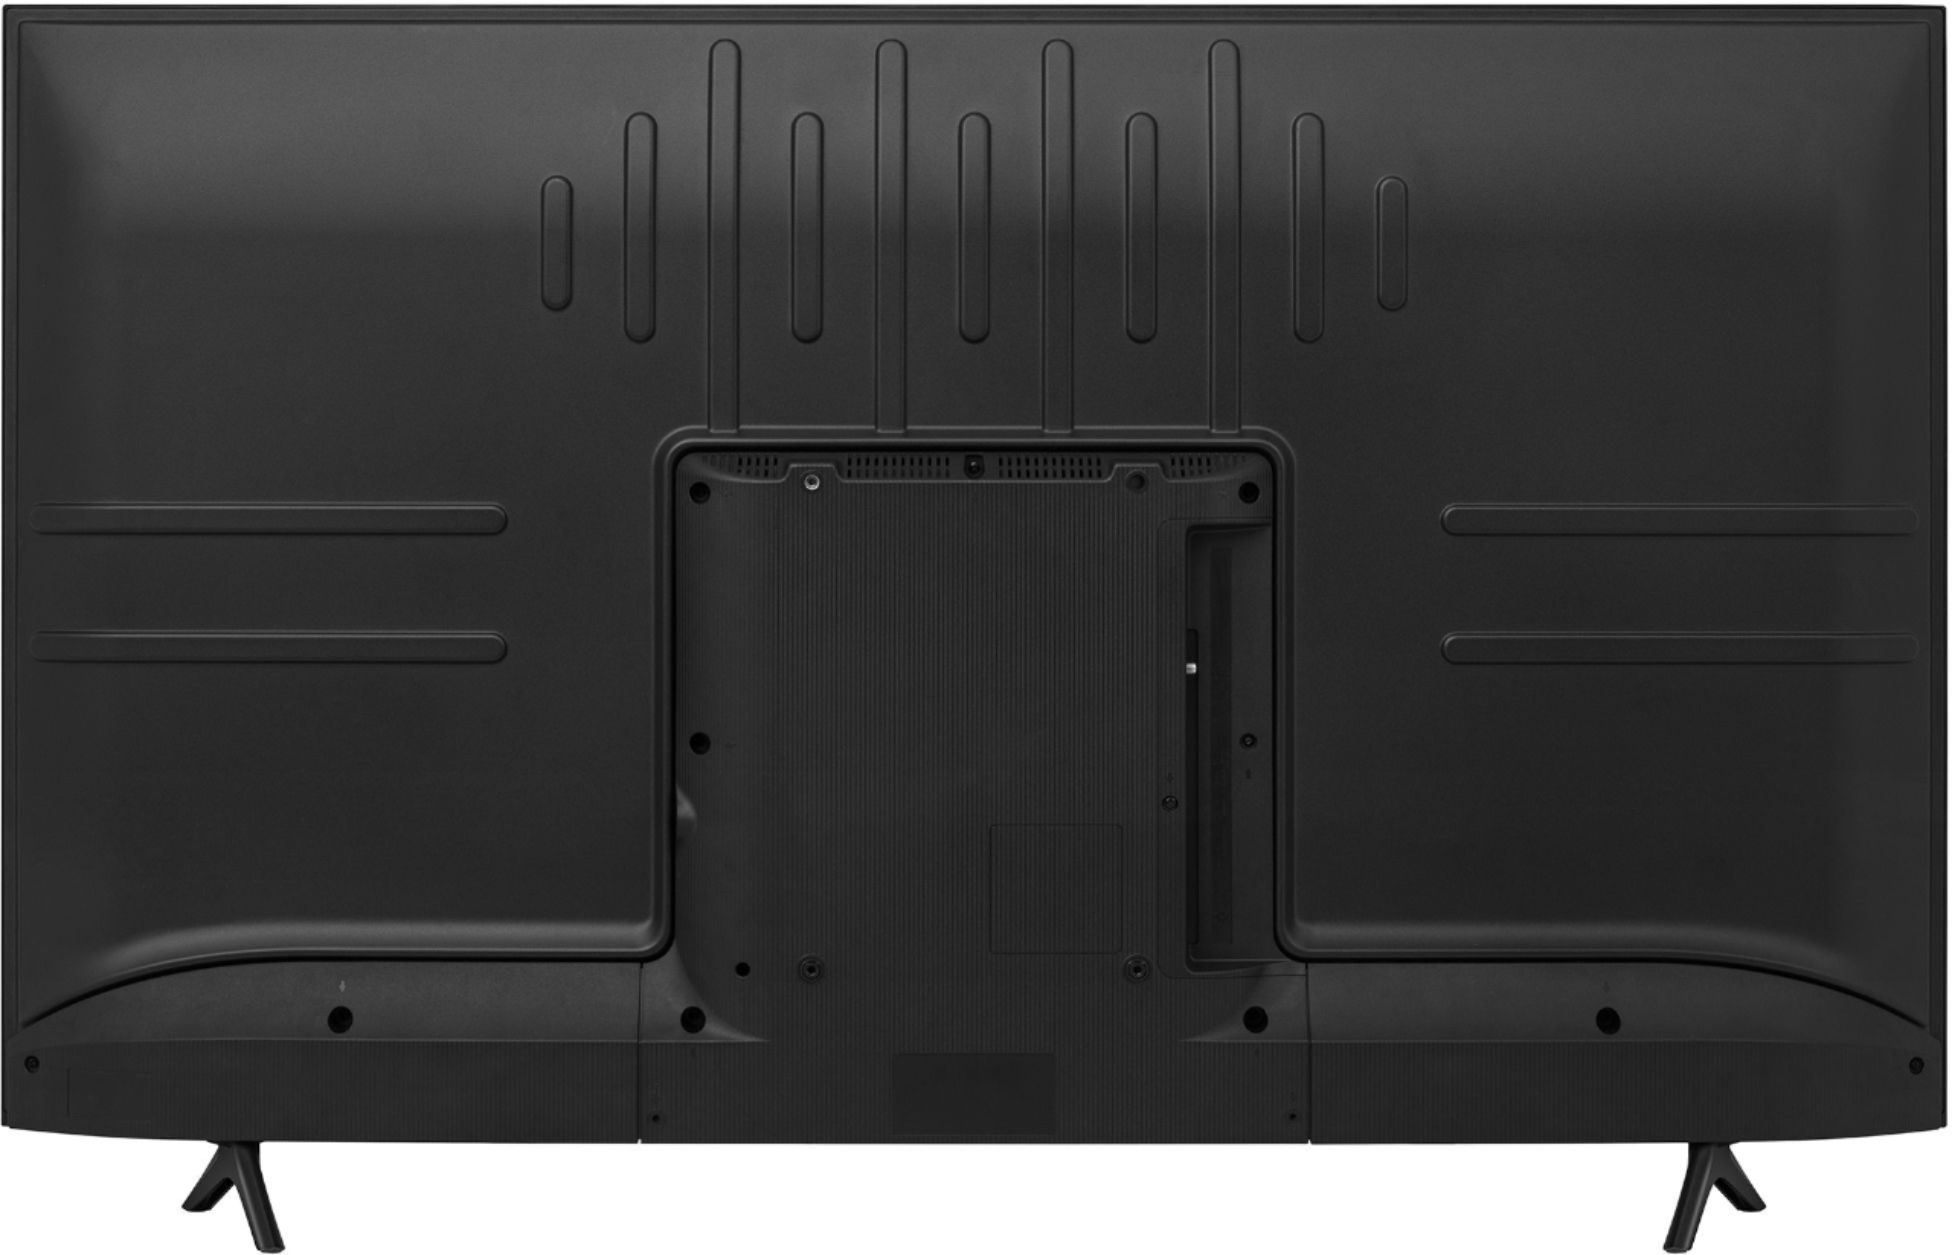 Back View: Hisense - 55" Class H65 Series LED 4K UHD Smart Android TV